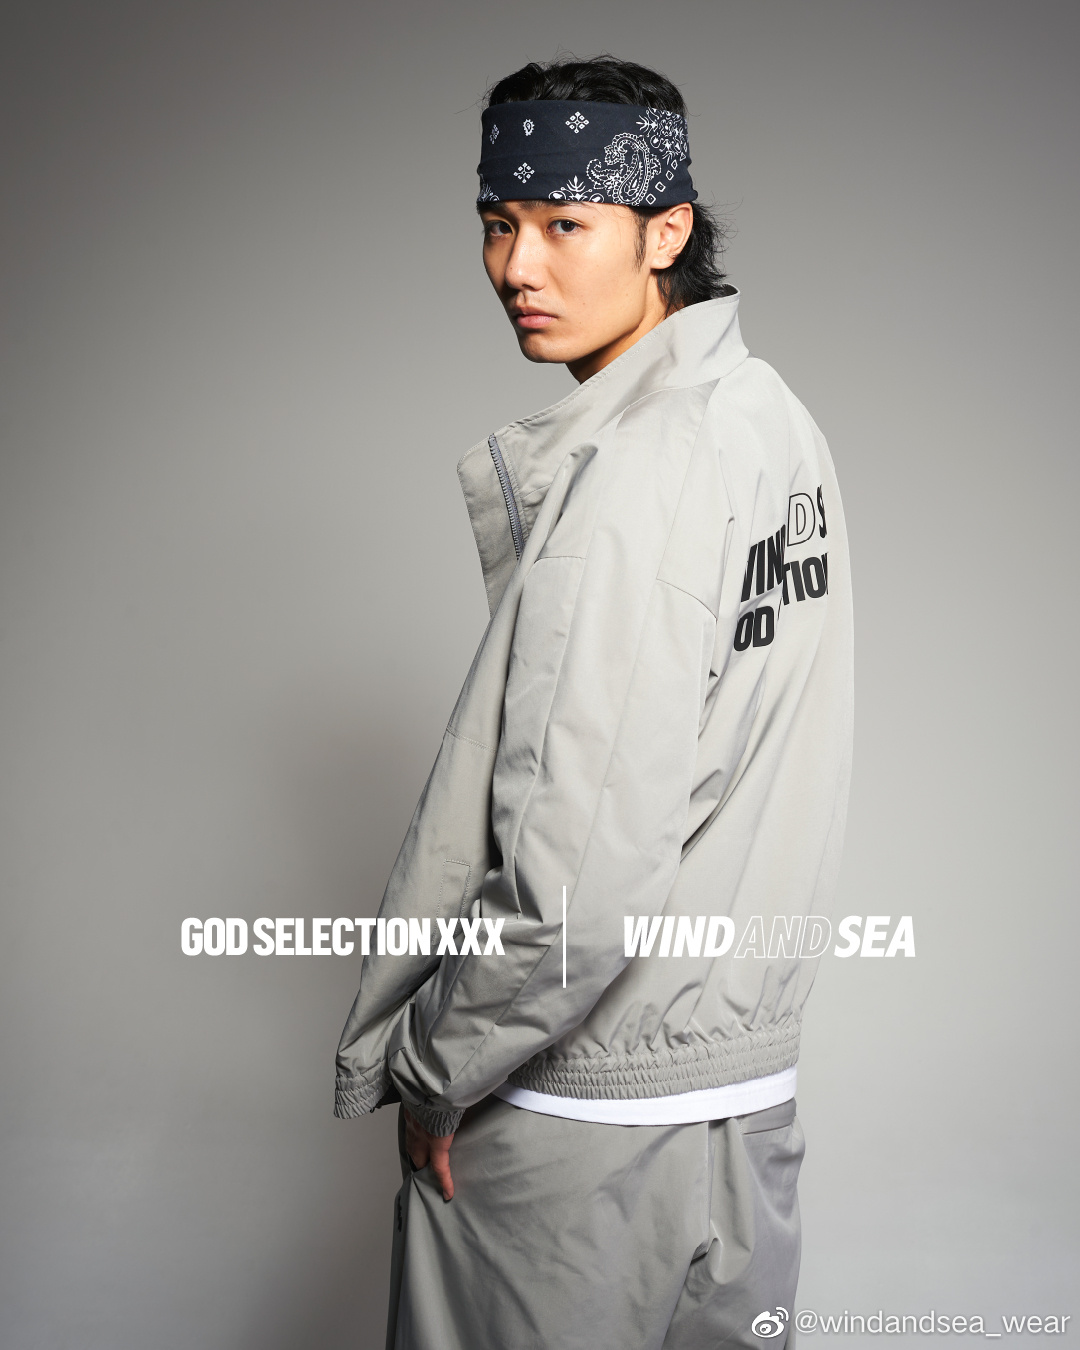 日本街头品牌WIND AND SEA与日本设计师品牌GOD SELECTION XXX合作